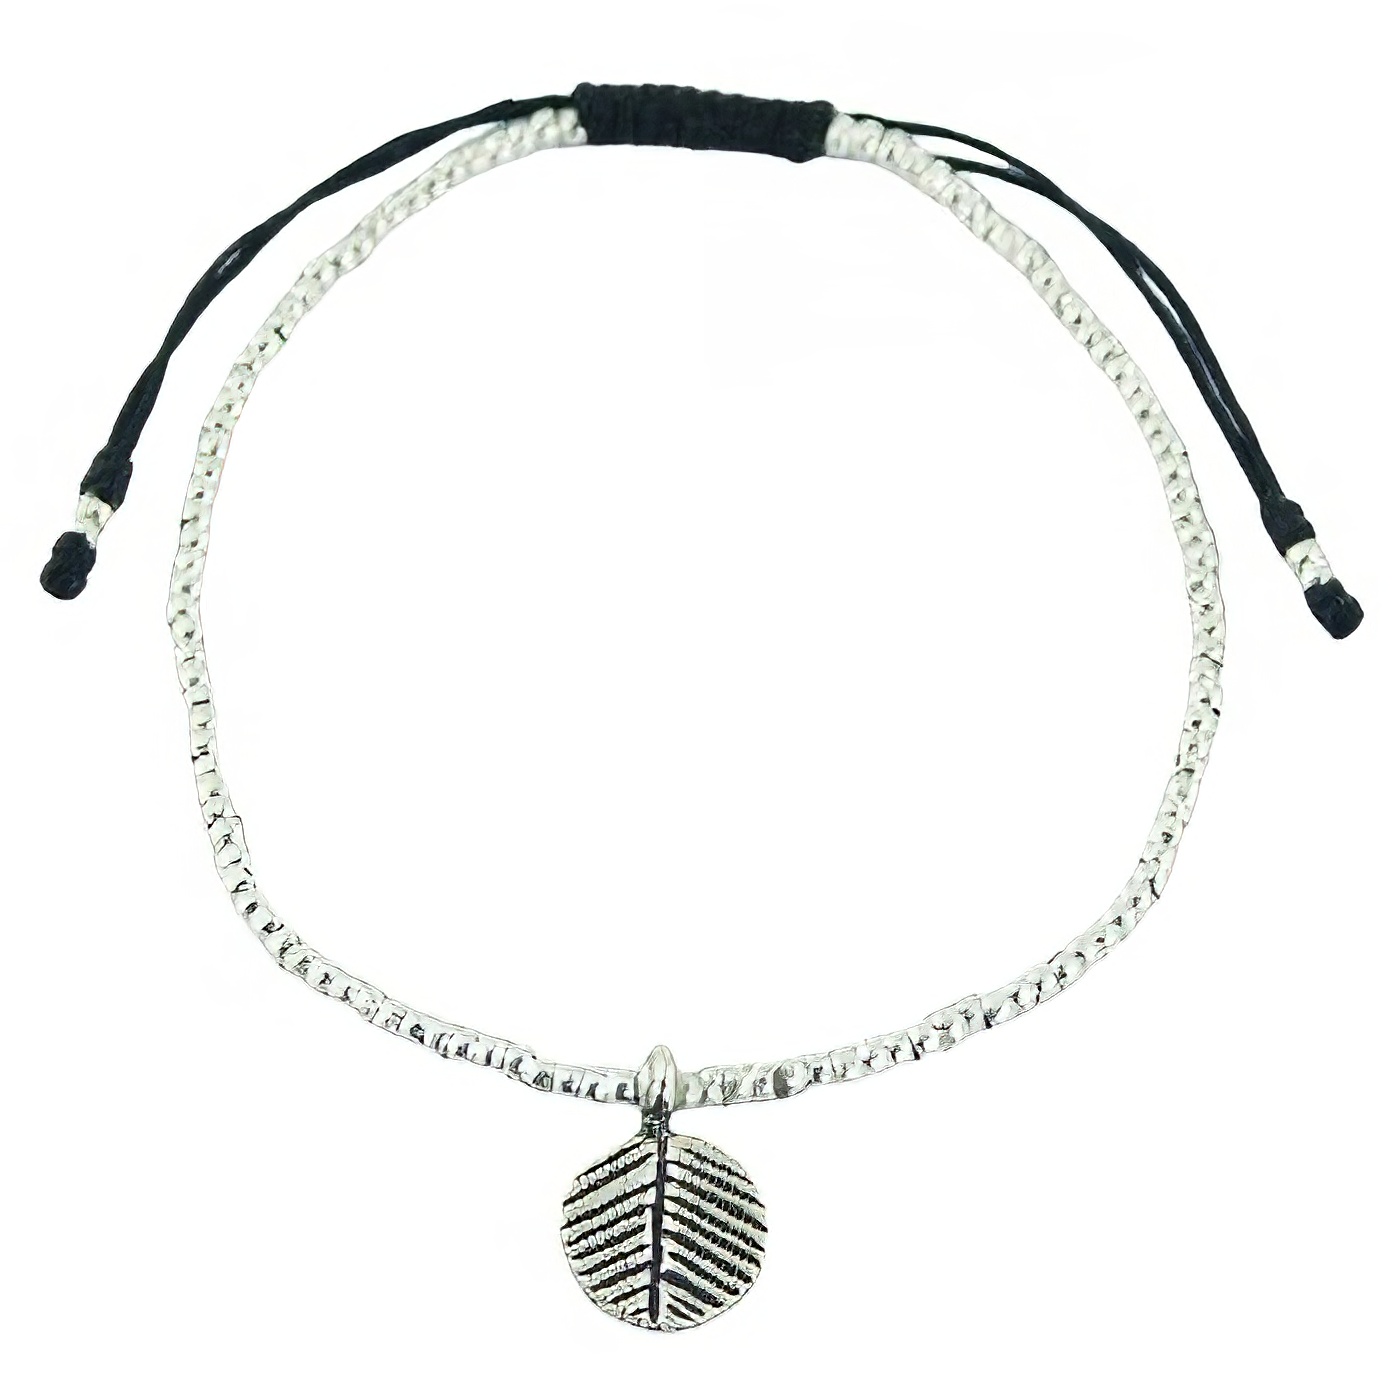 Antiqued Silver Leaf Charm Small Beads Macrame Bracelet 